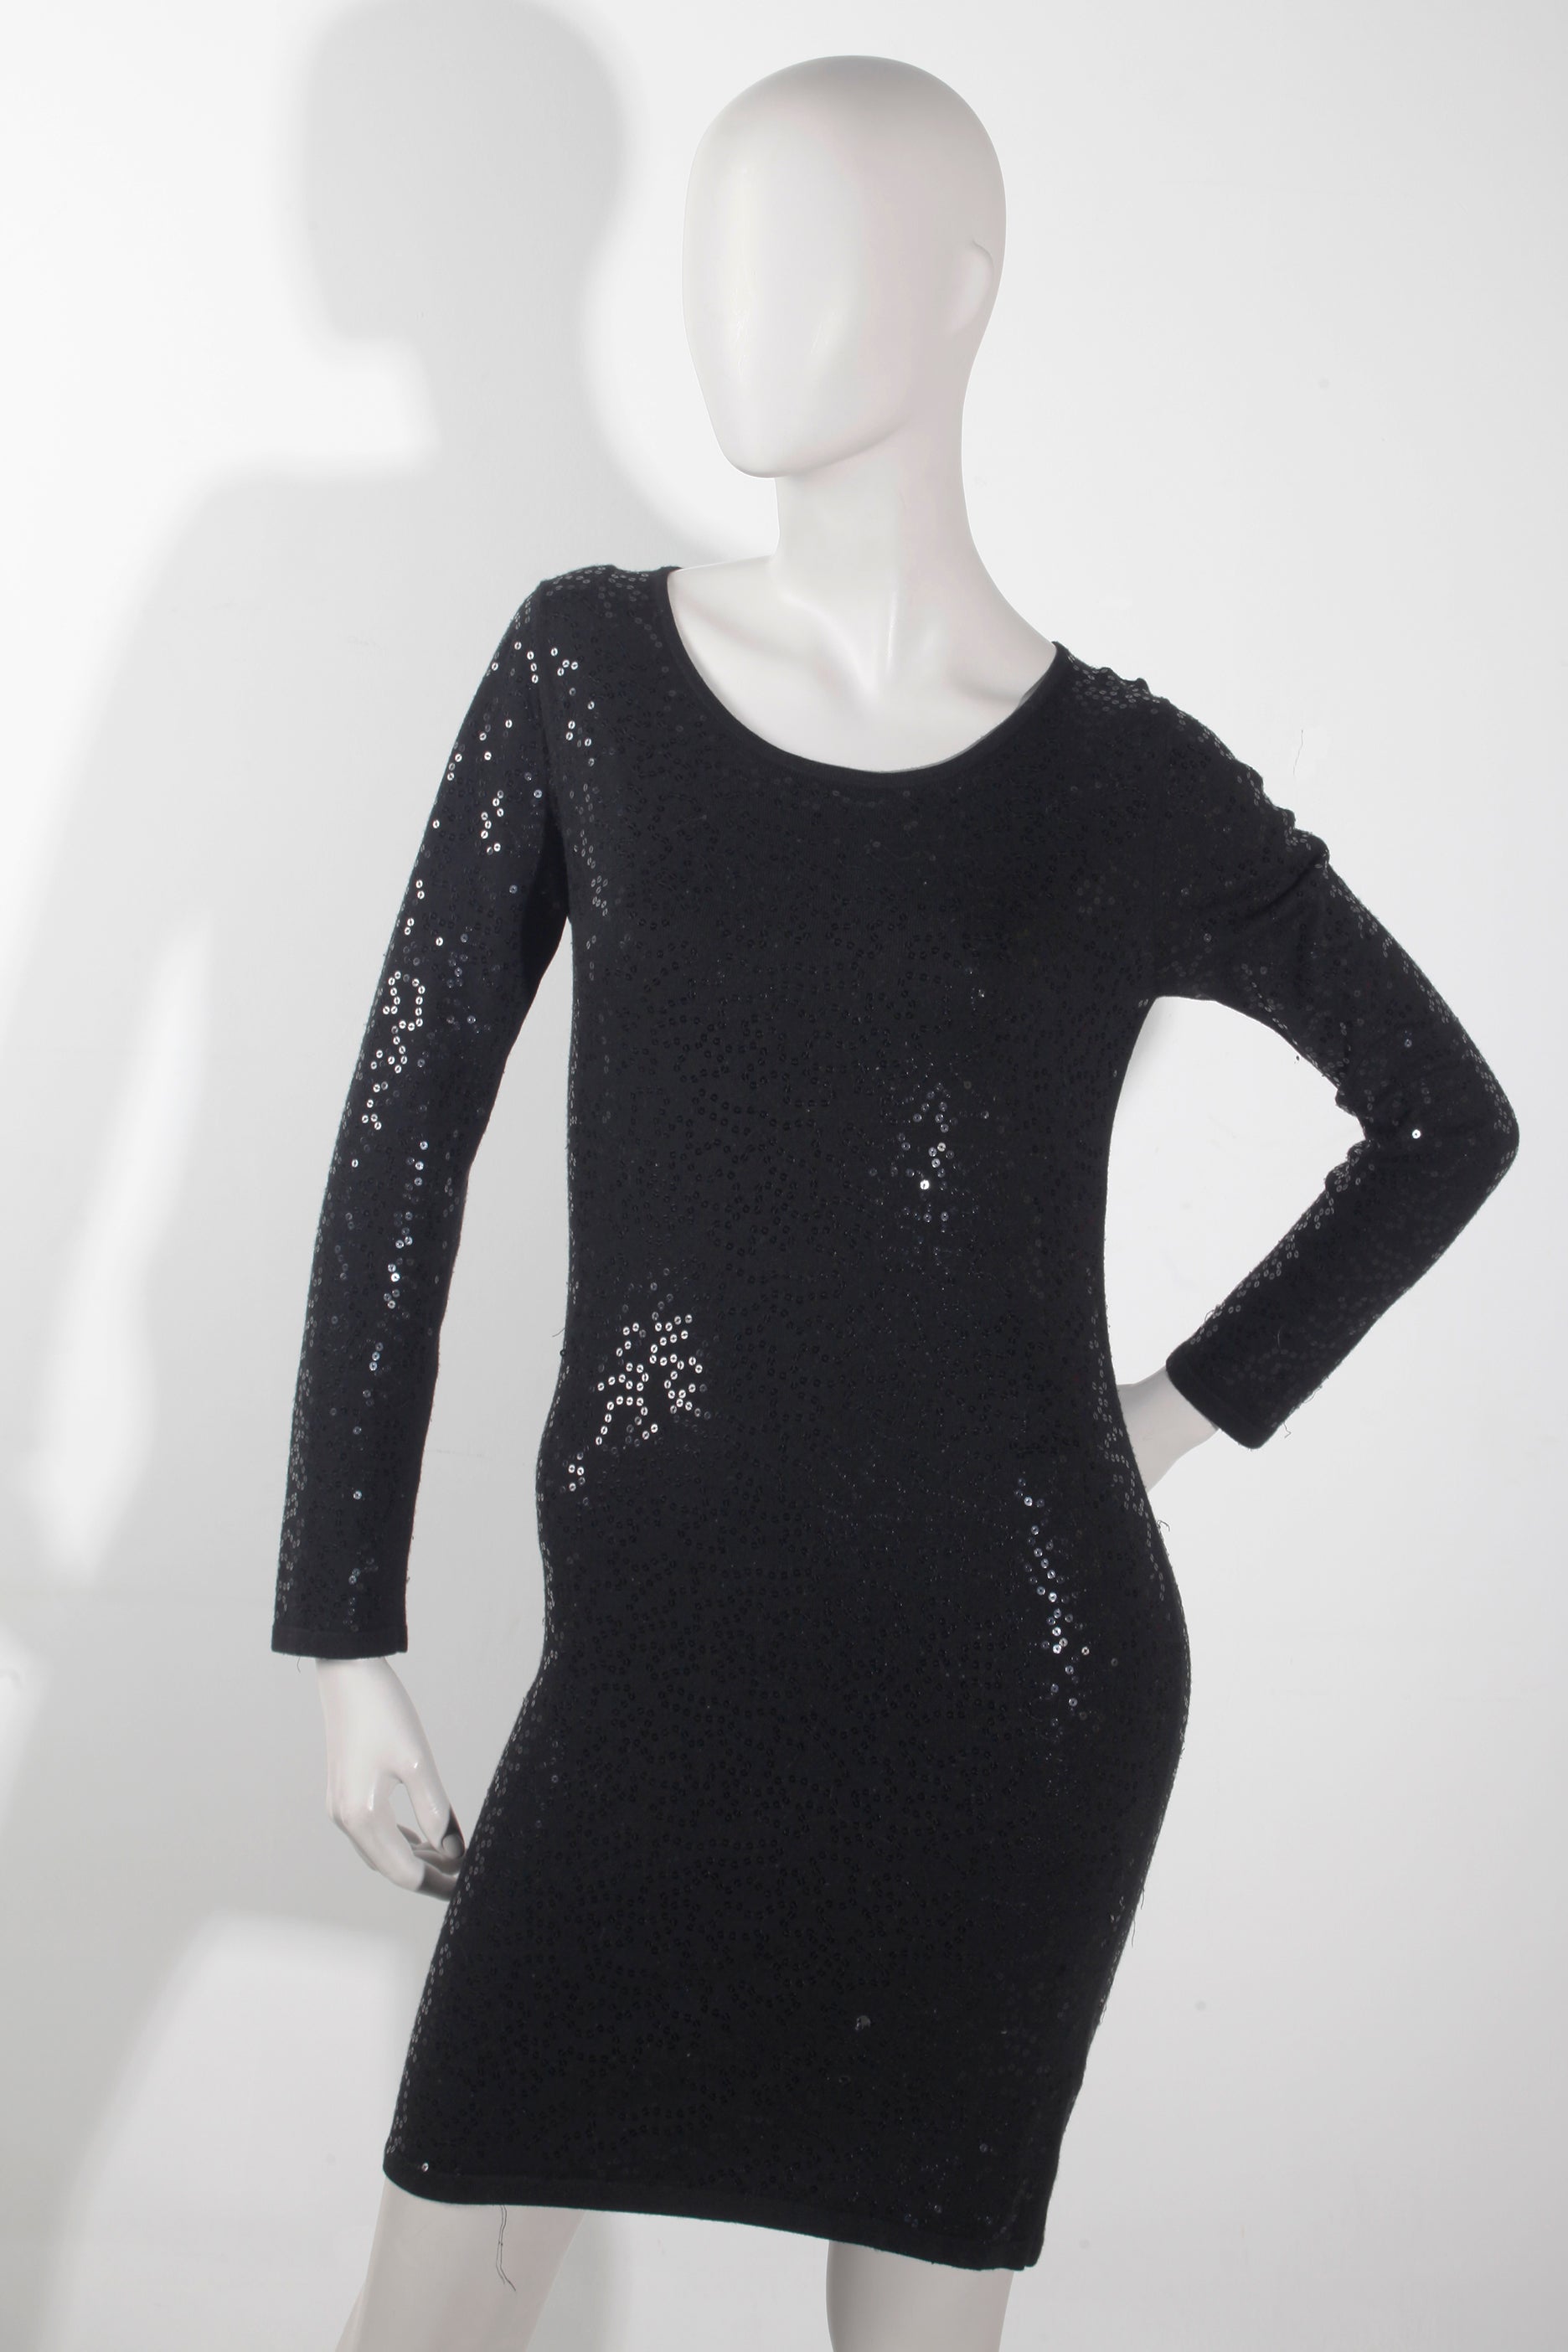 Reiss Black Sequin Sweater Dress (small/medium)